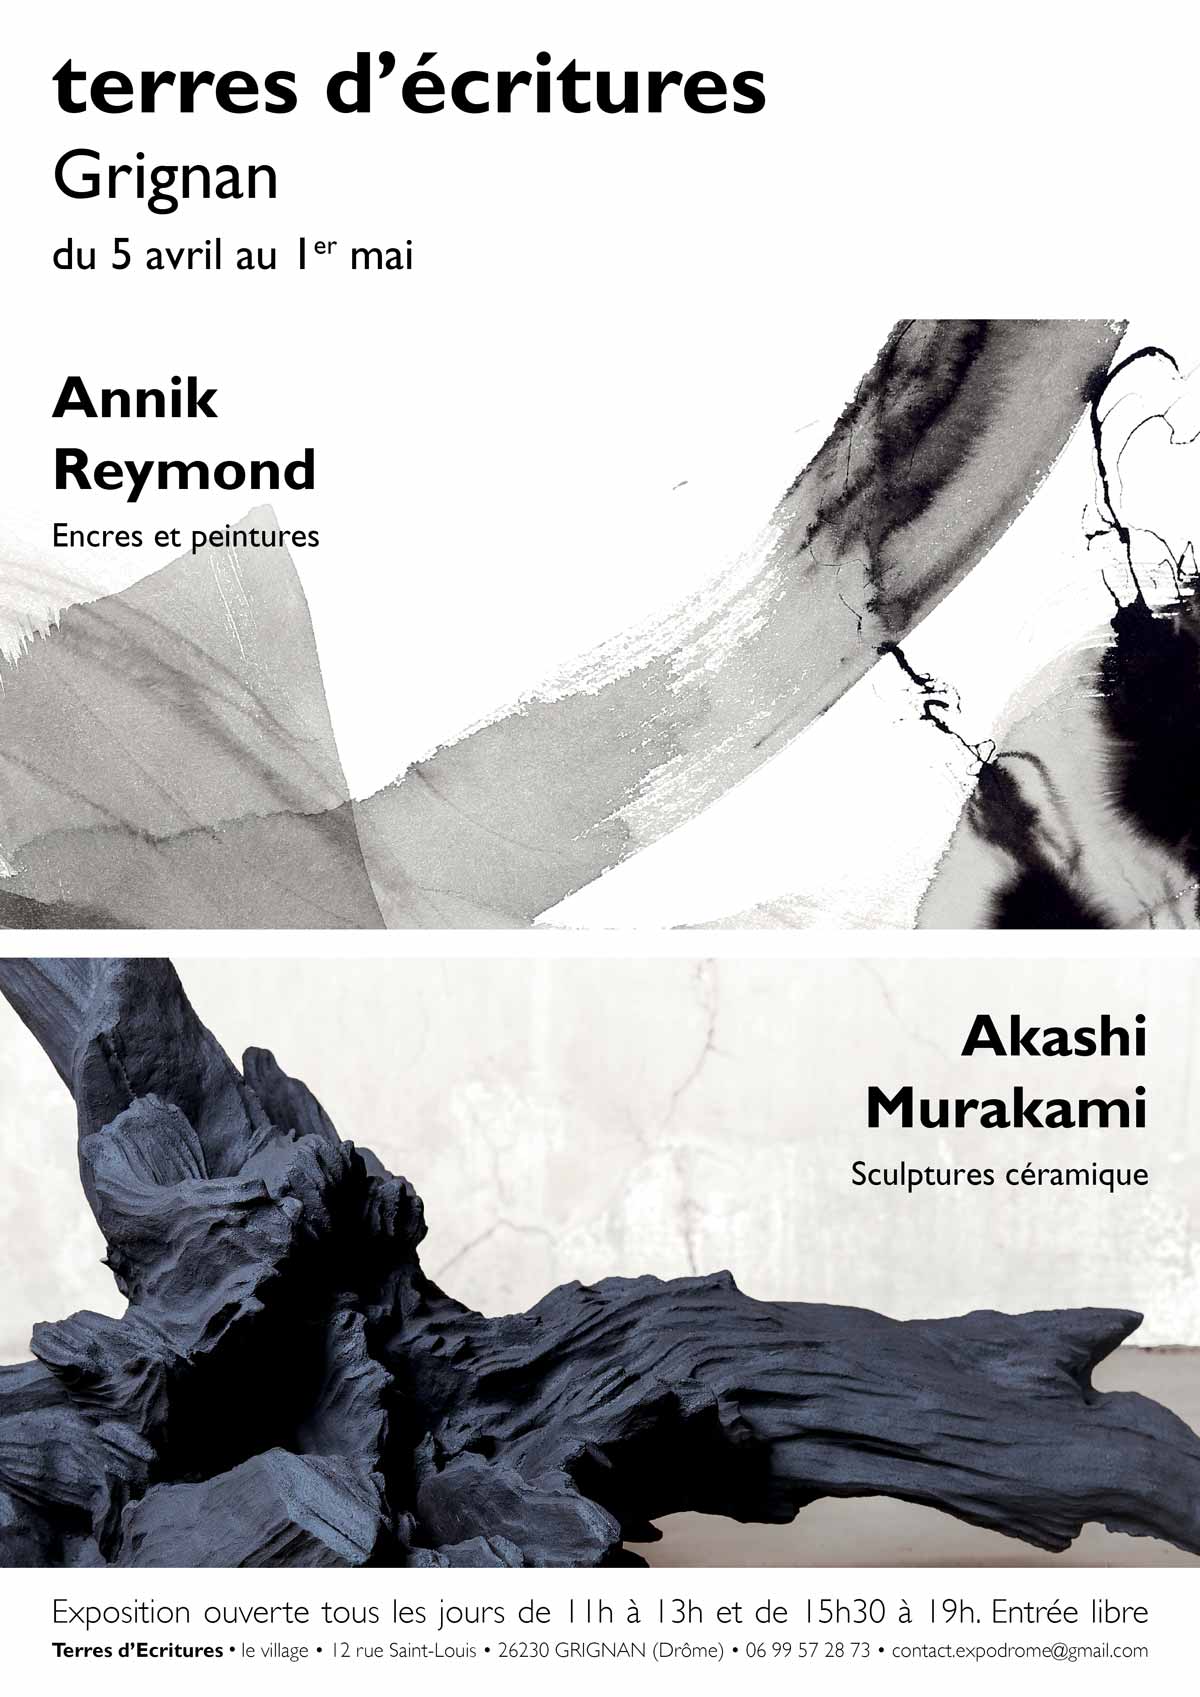 Exposition Akashi Murakami, sculptures céramique et Annik Reymond, encres et peintures